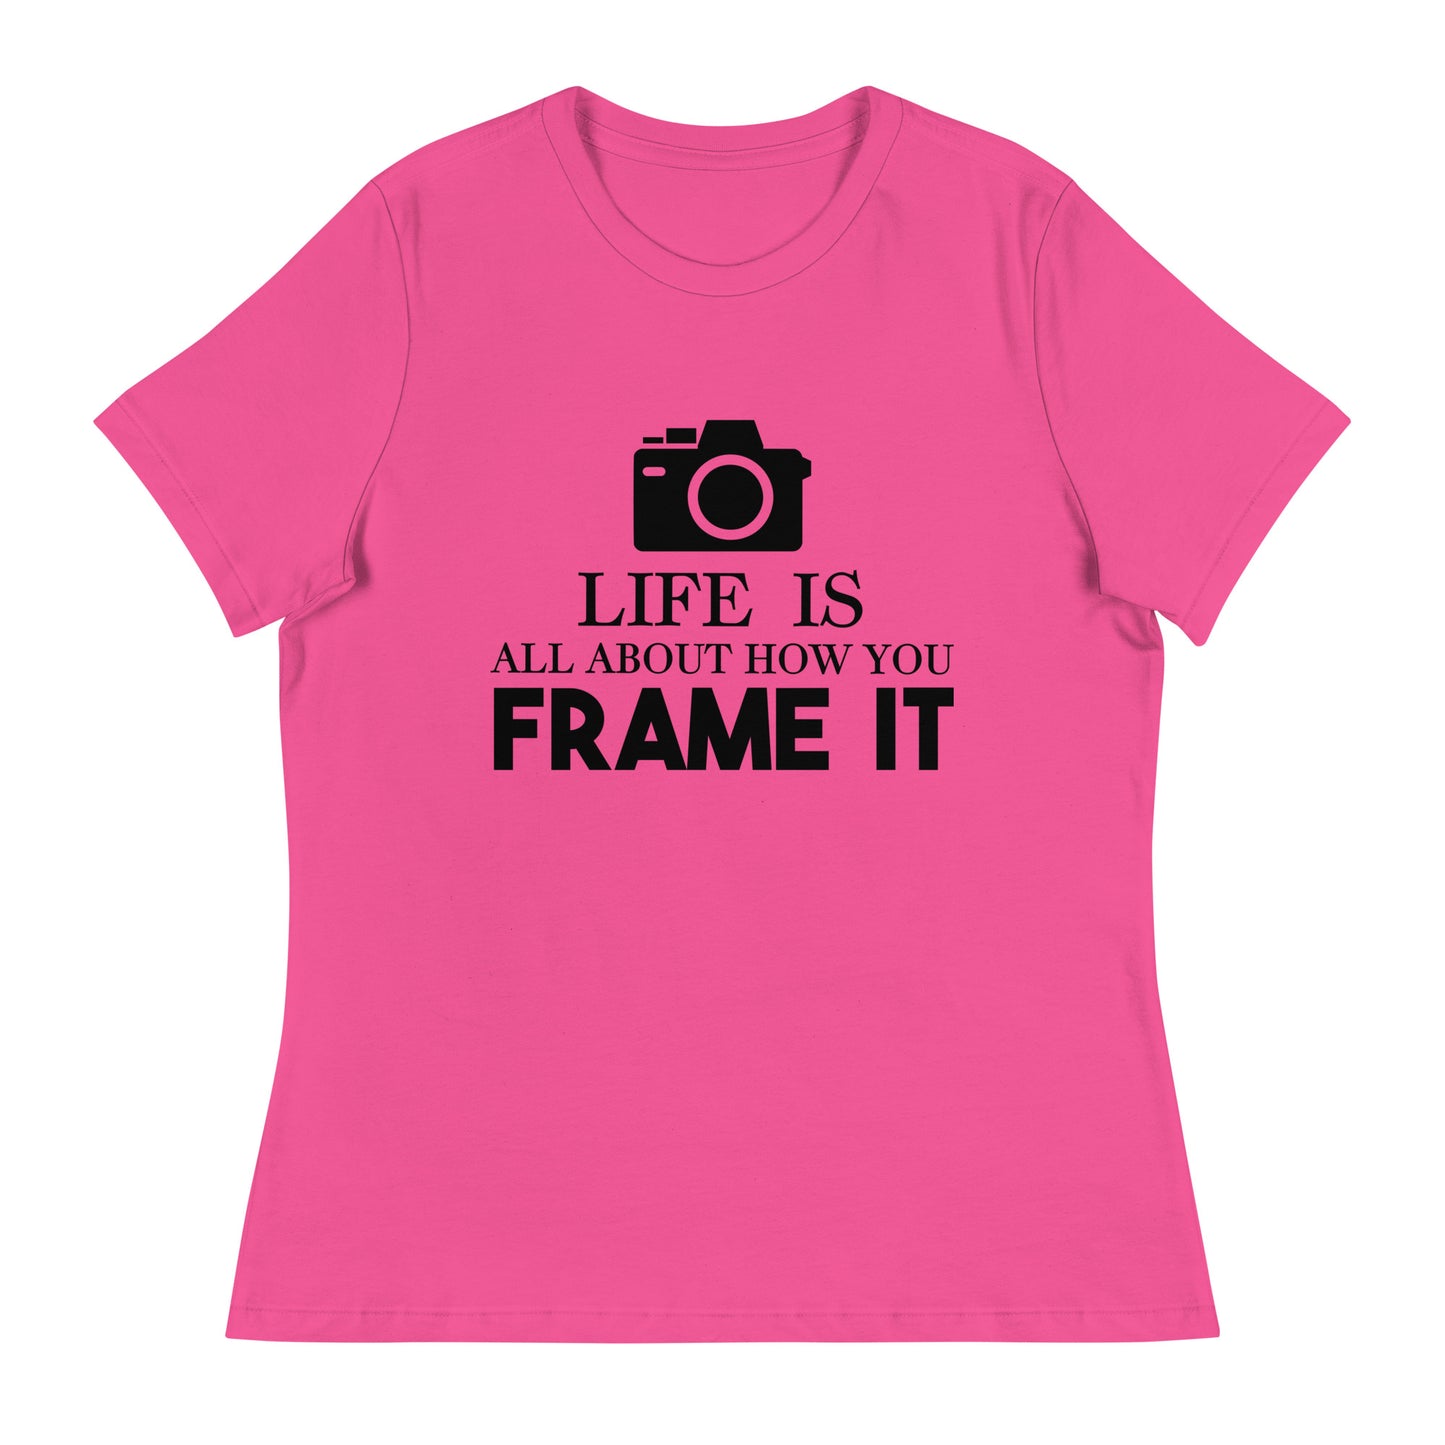 T-shirt da ragazza - Frame it - Logo nero